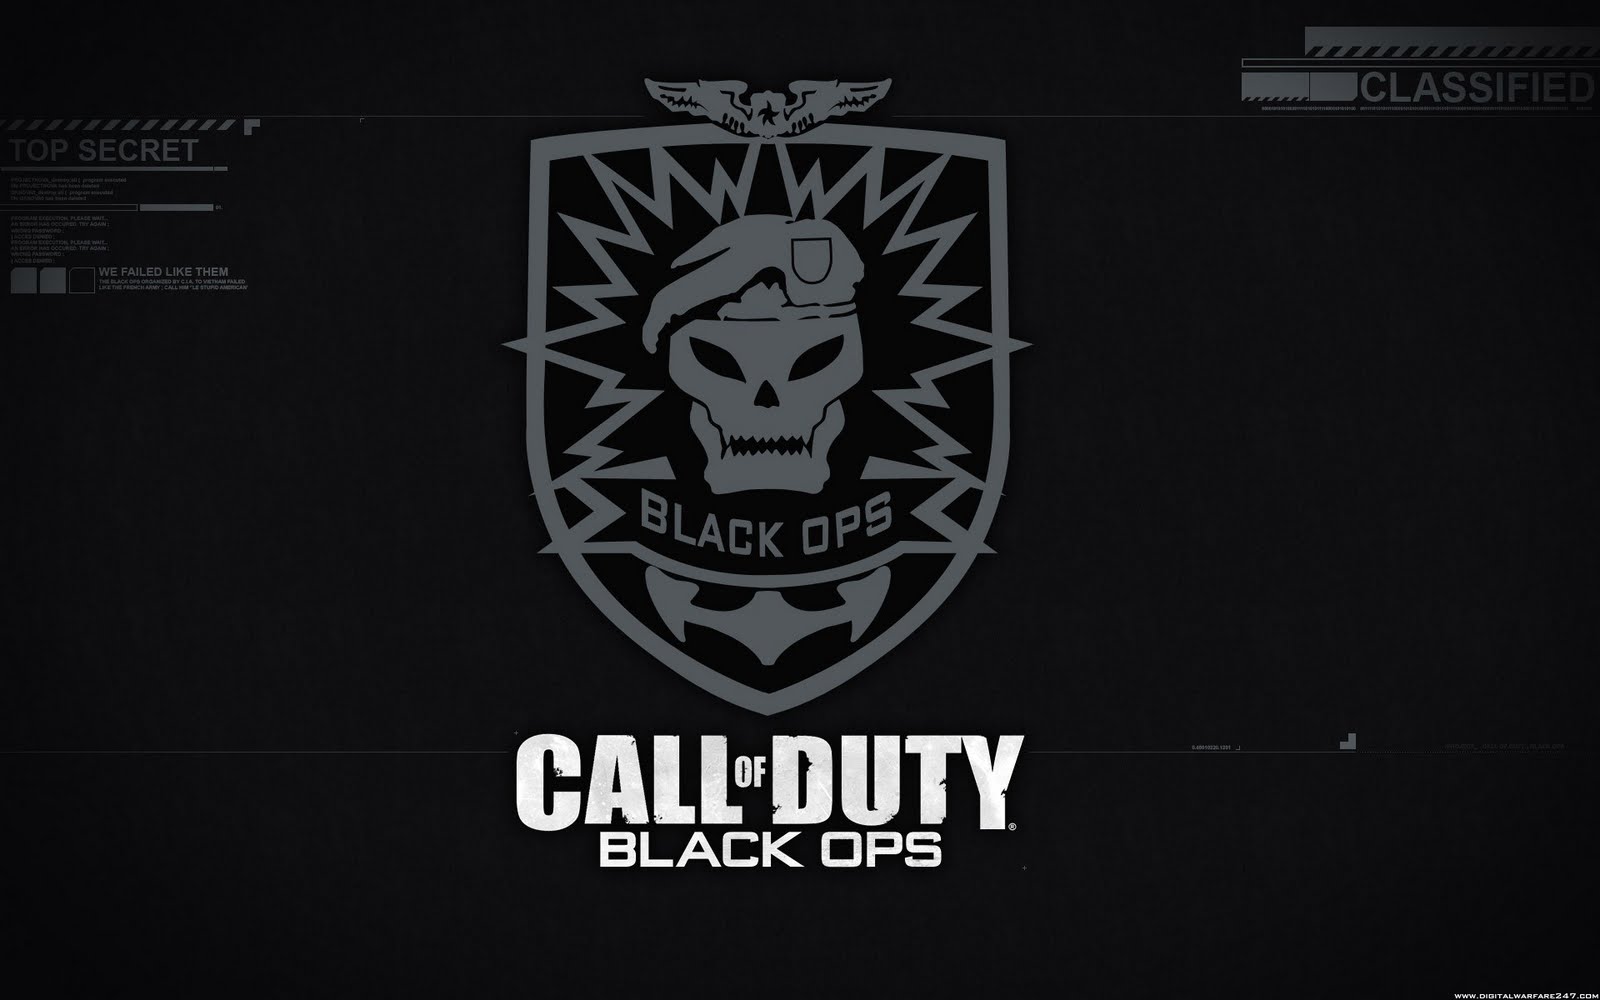 http://2.bp.blogspot.com/-jlZ_U4syTaw/Tiri0IZOH5I/AAAAAAAACWQ/58UZeAjuK5I/s1600/call_of_duty_black_ops_logo_3.jpg